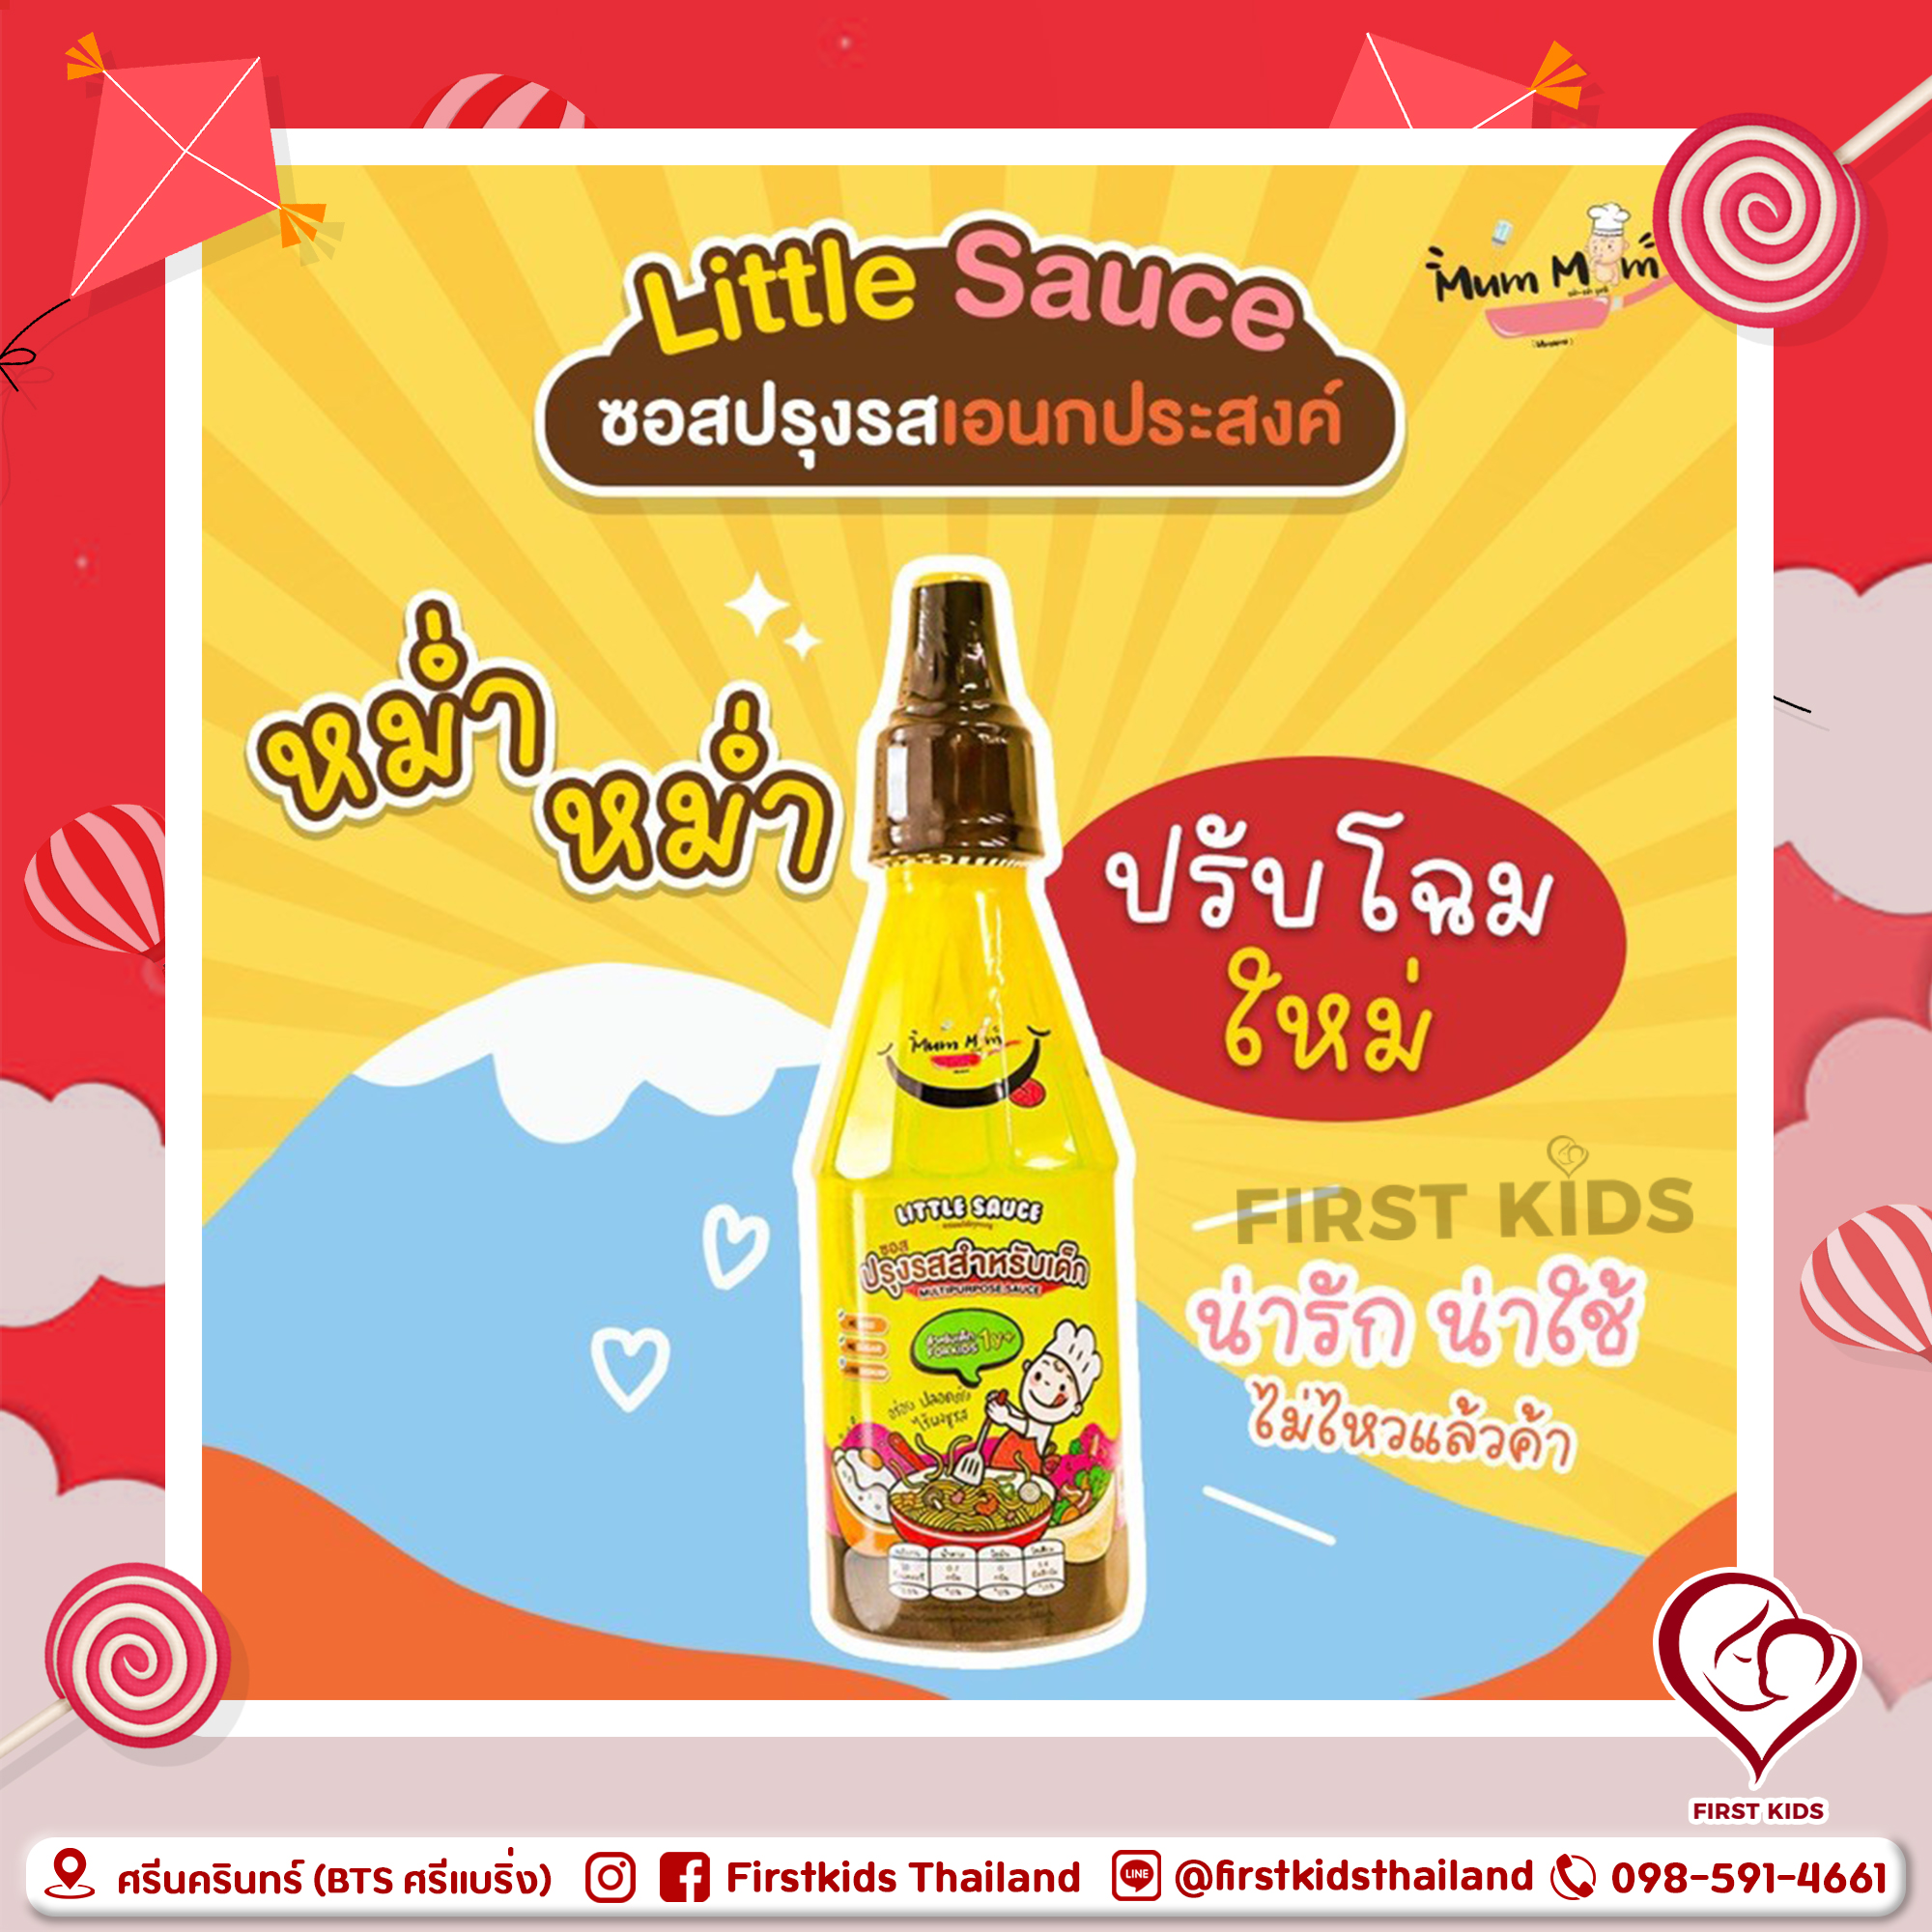 Mum Mum Little Sauce ซอสปรุงรสสำหรับเด็ก ทำให้อาหารอร่อยใน 1 ช้อนชา #firstkidsthailand อ.ย.1010216350006